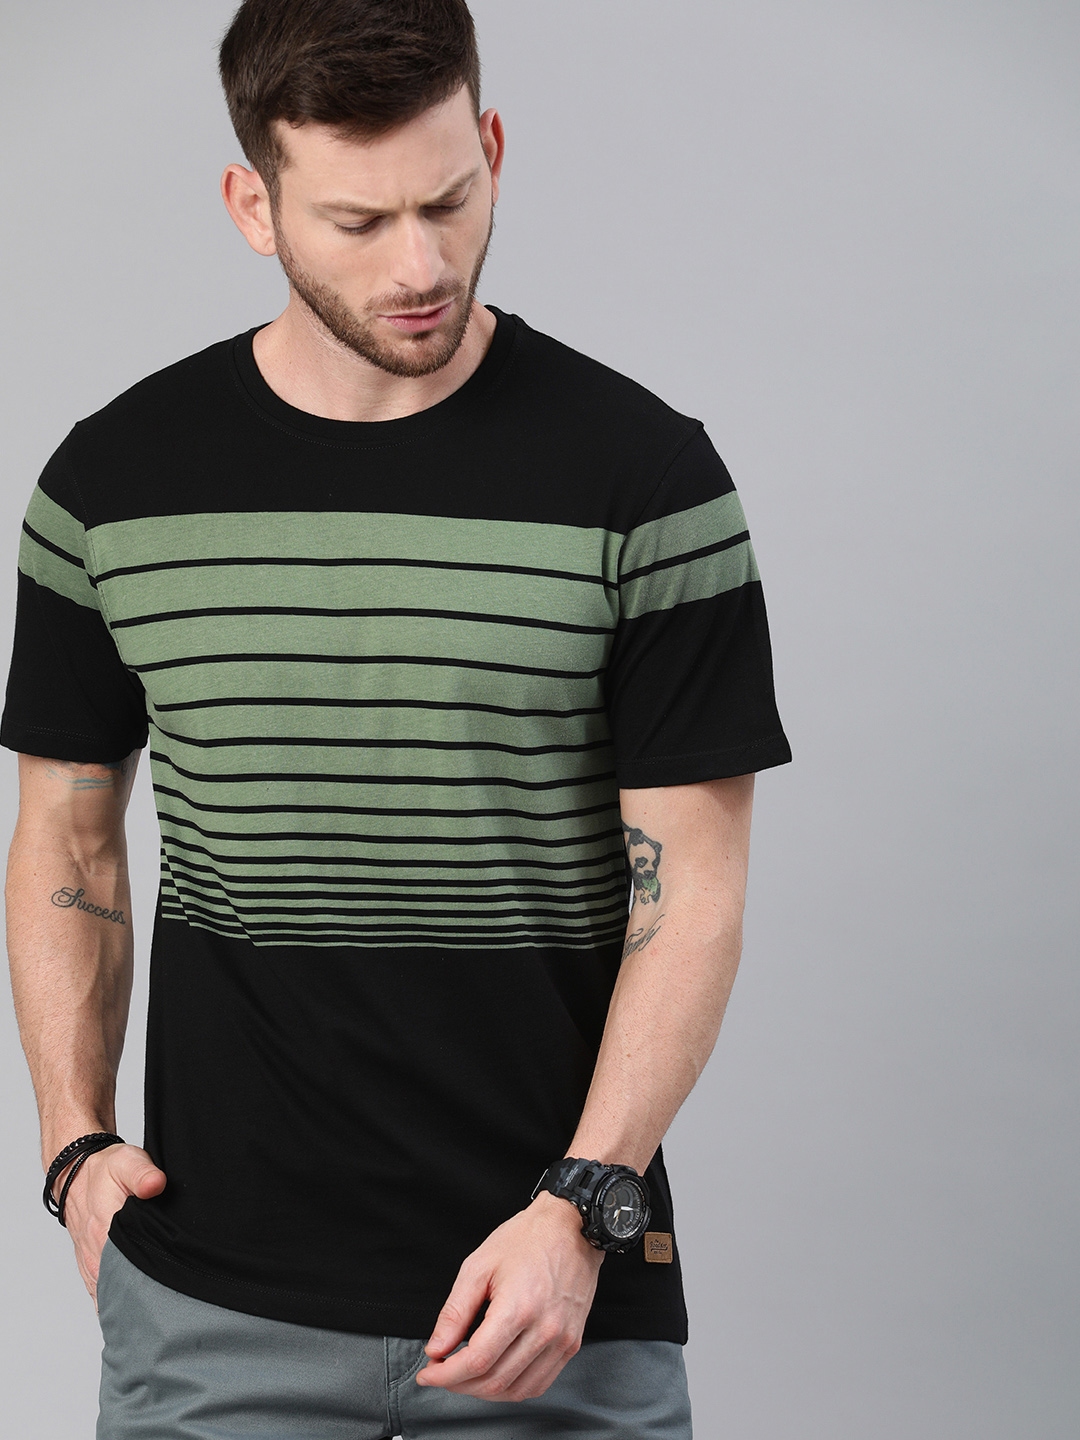 Buy Roadster Men Black & Olive Green Striped Cotton T Shirt - Tshirts ...